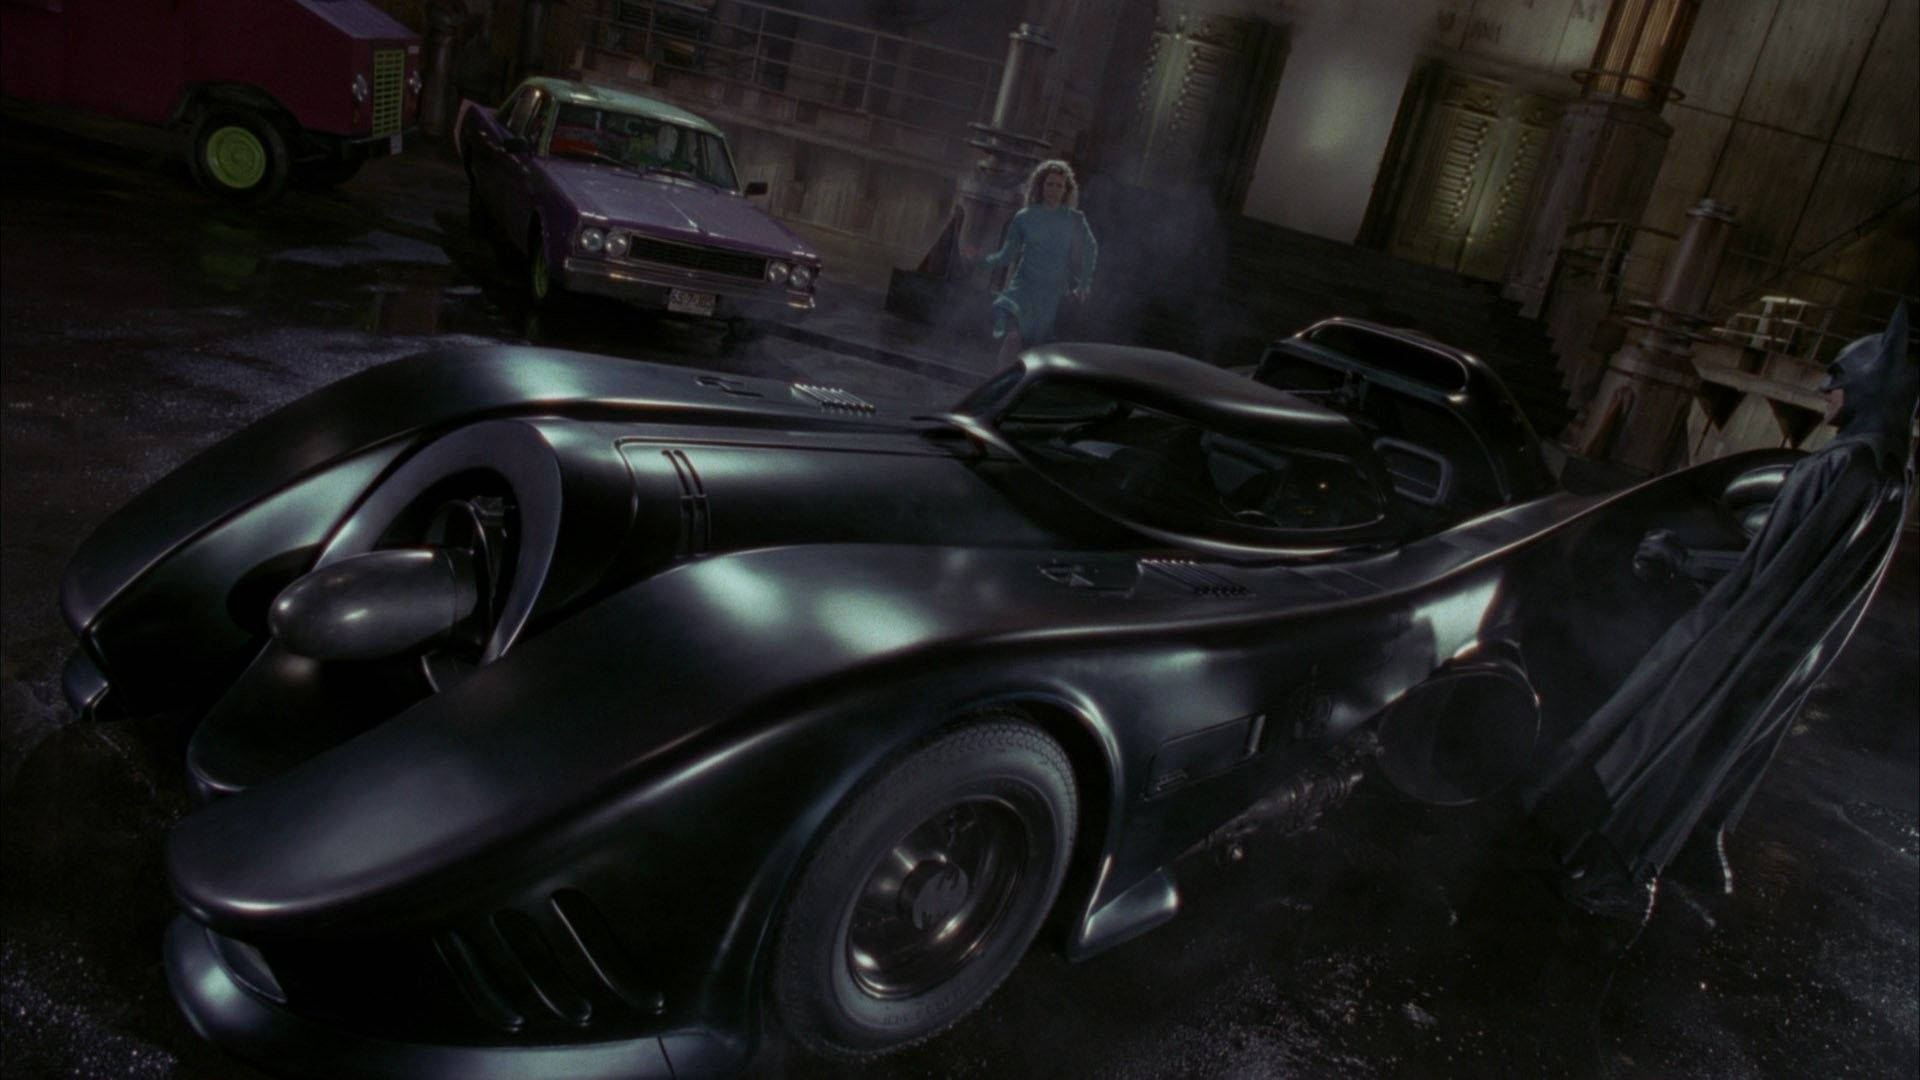 Batman Returns Batmobile